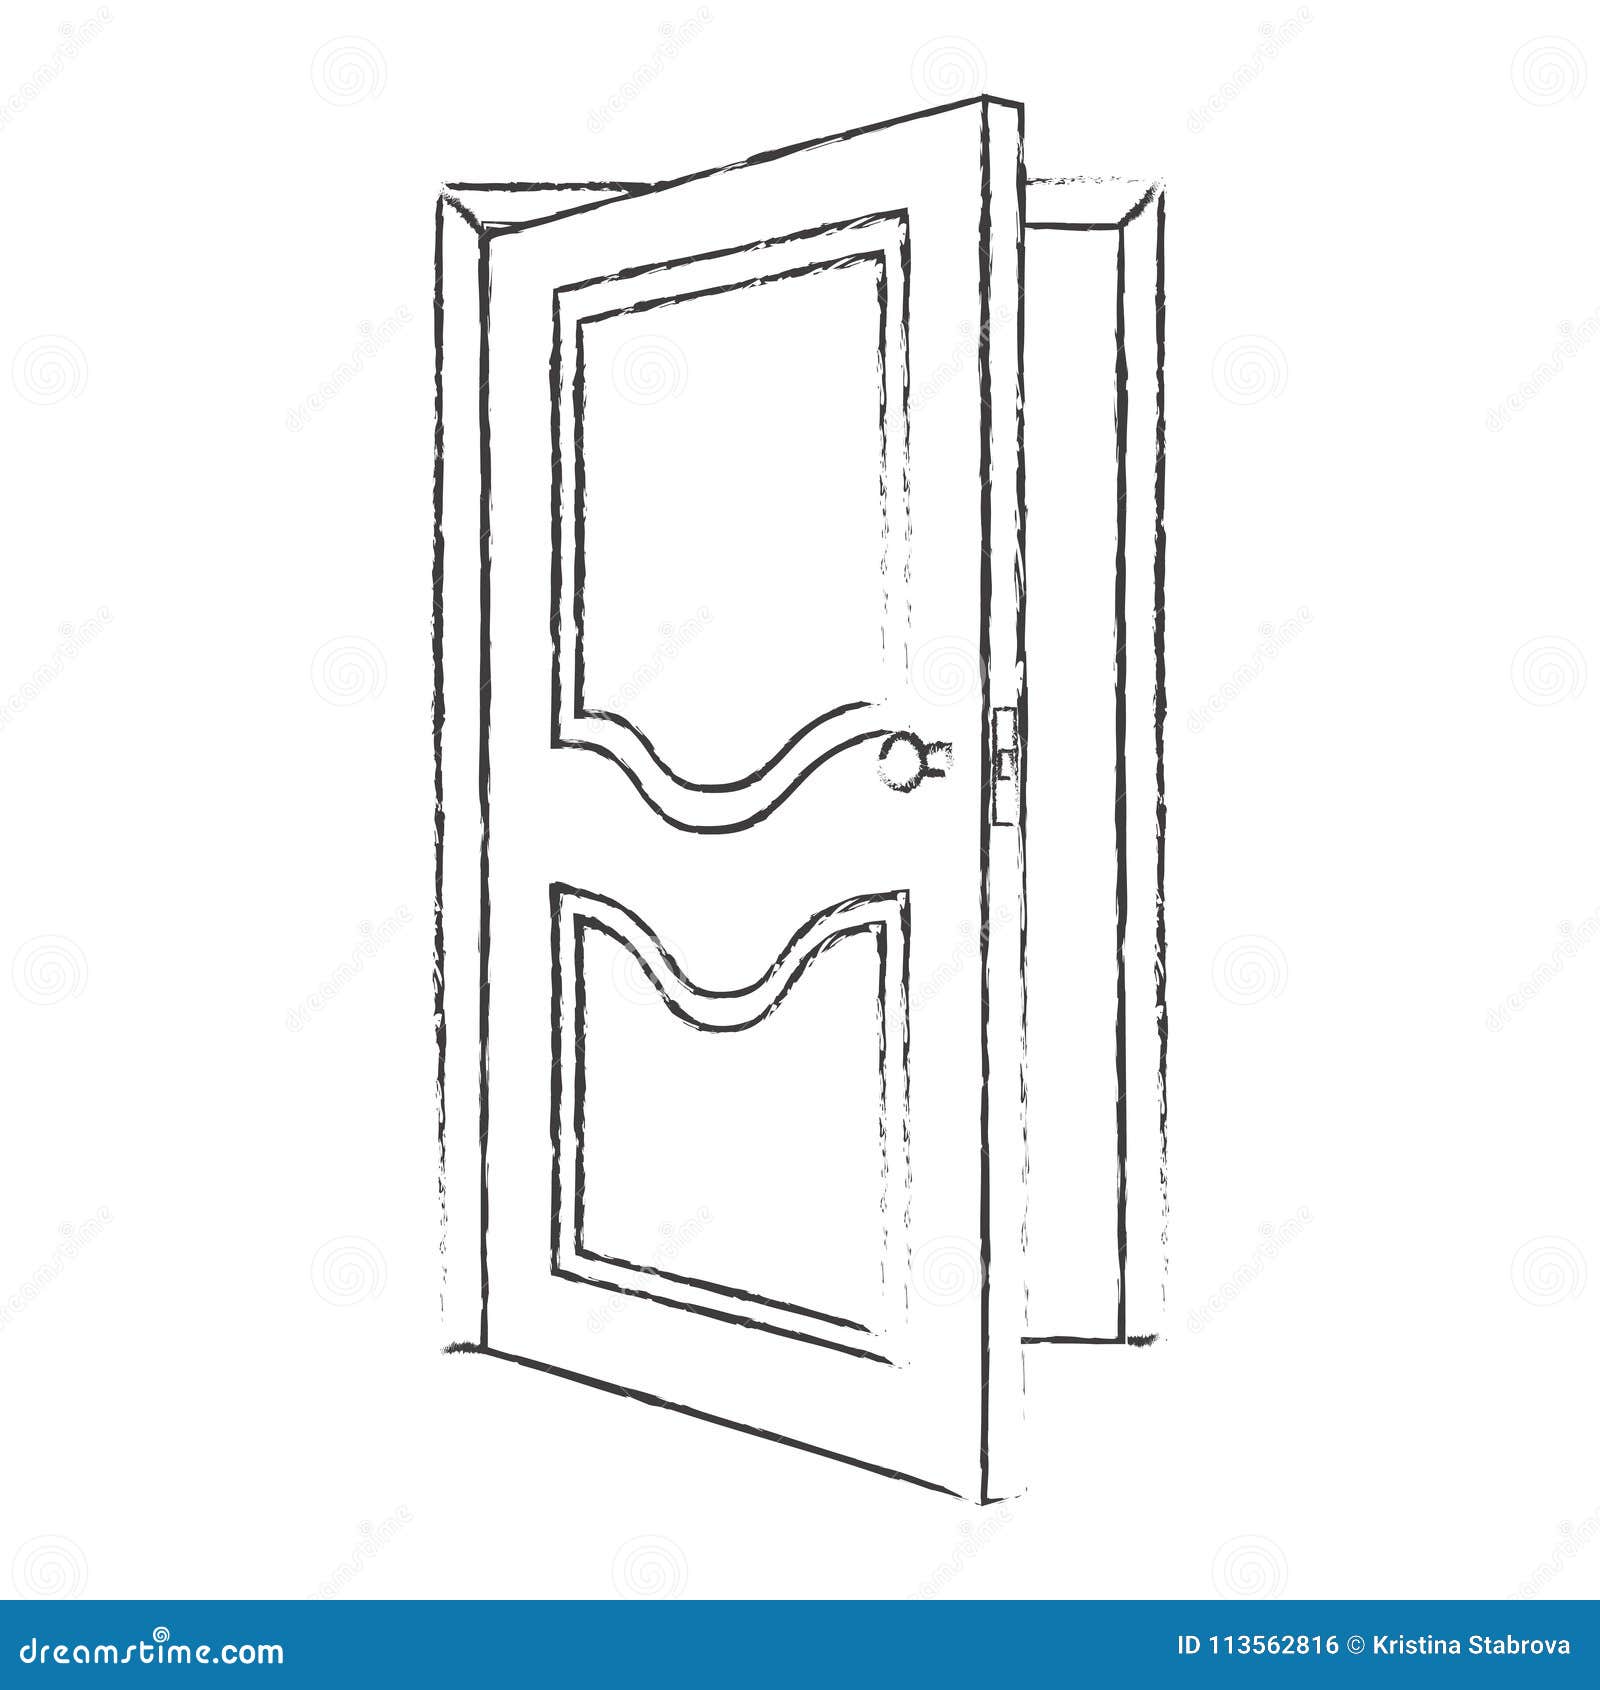 21900 Door Drawings Illustrations RoyaltyFree Vector Graphics  Clip  Art  iStock